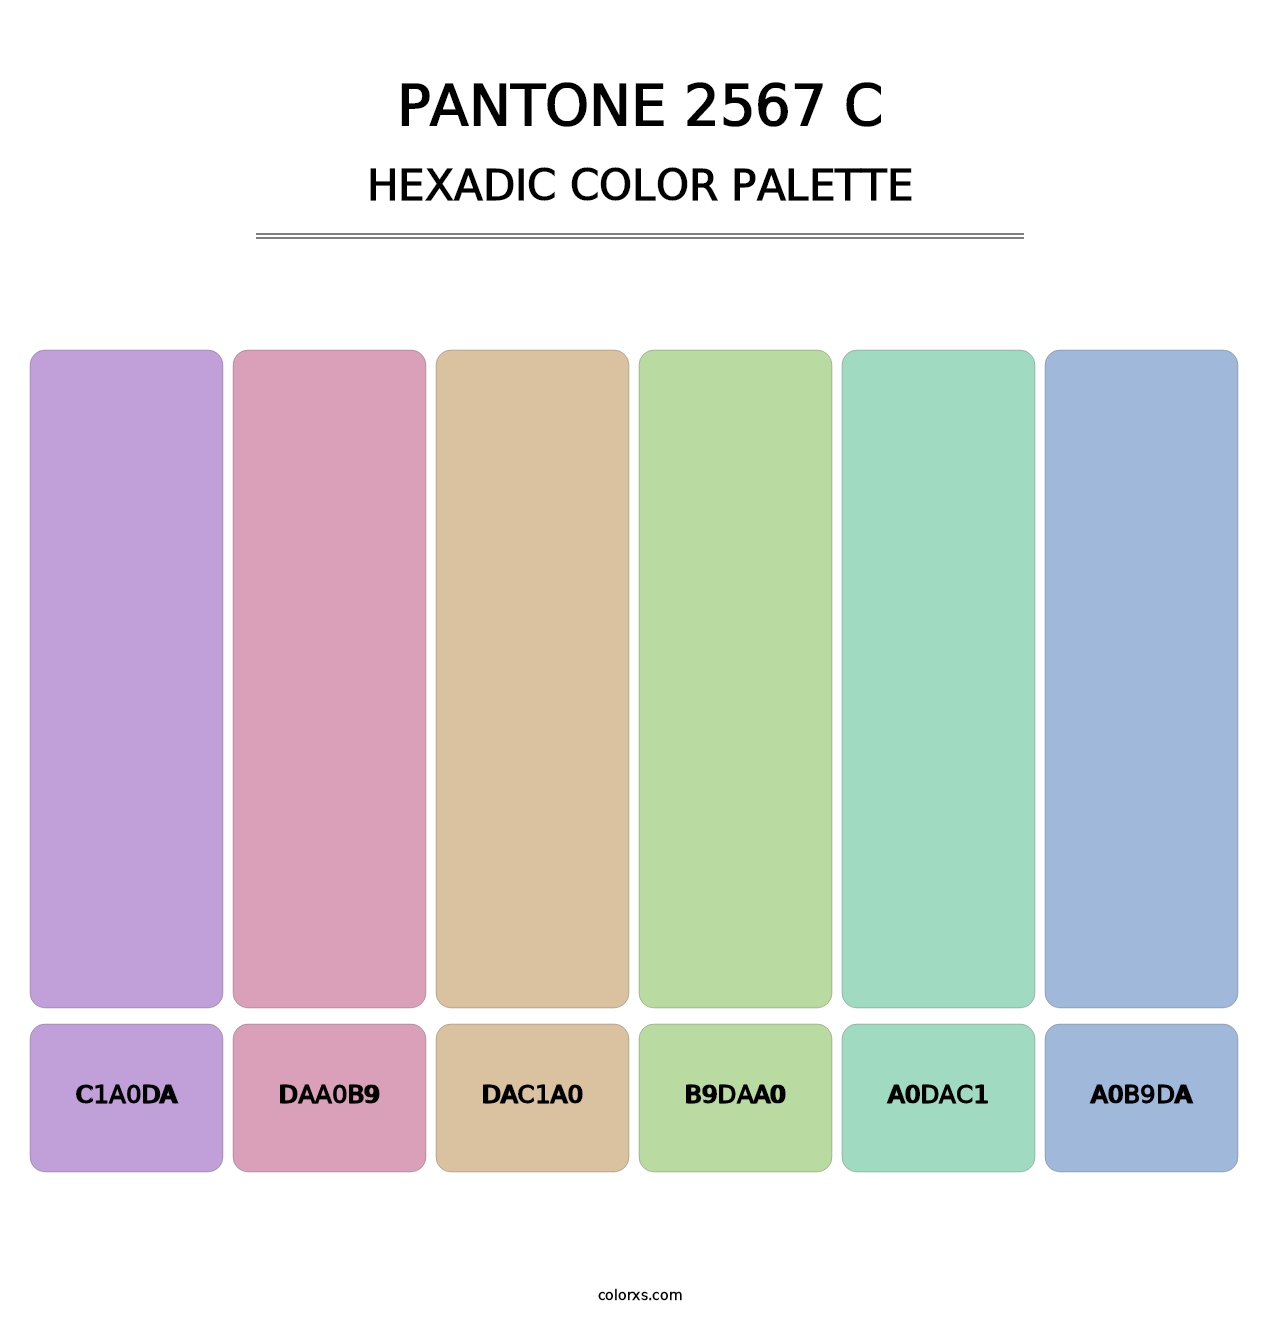 PANTONE 2567 C - Hexadic Color Palette